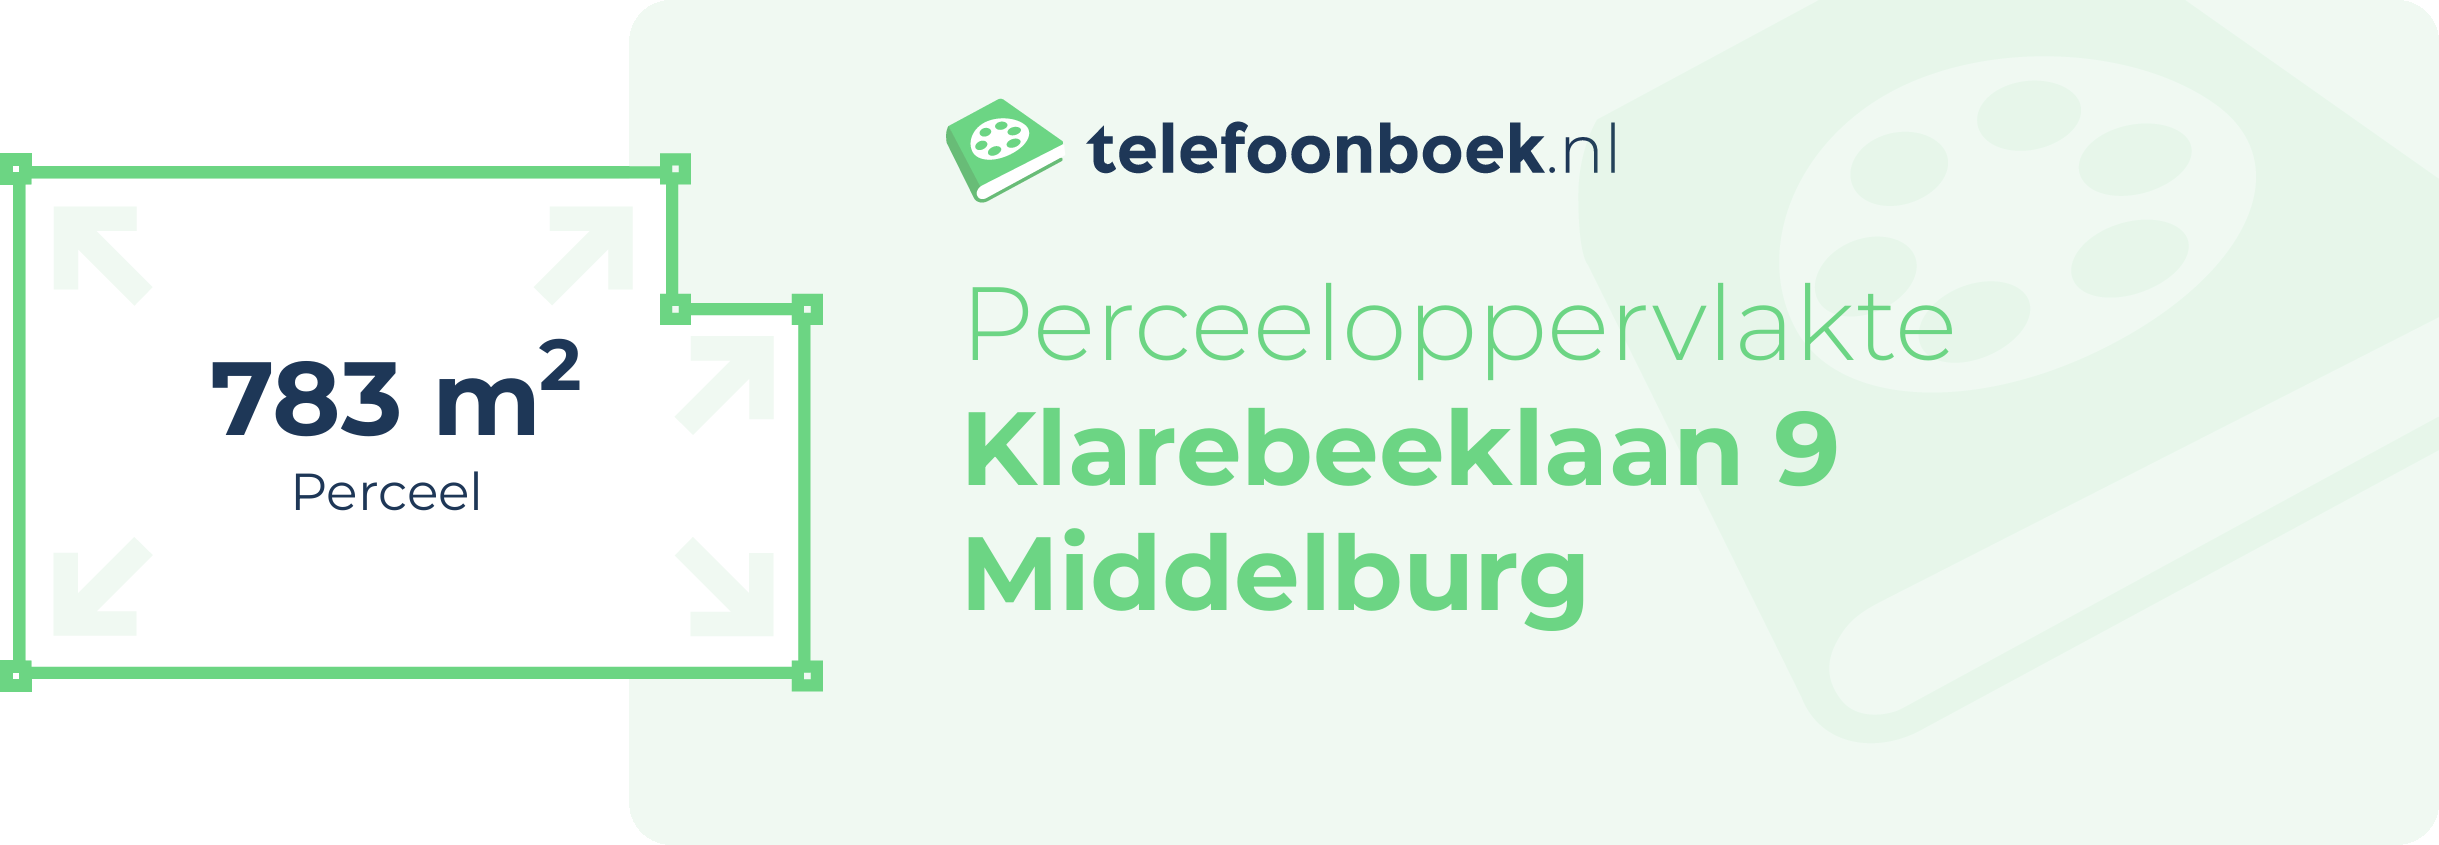 Perceeloppervlakte Klarebeeklaan 9 Middelburg